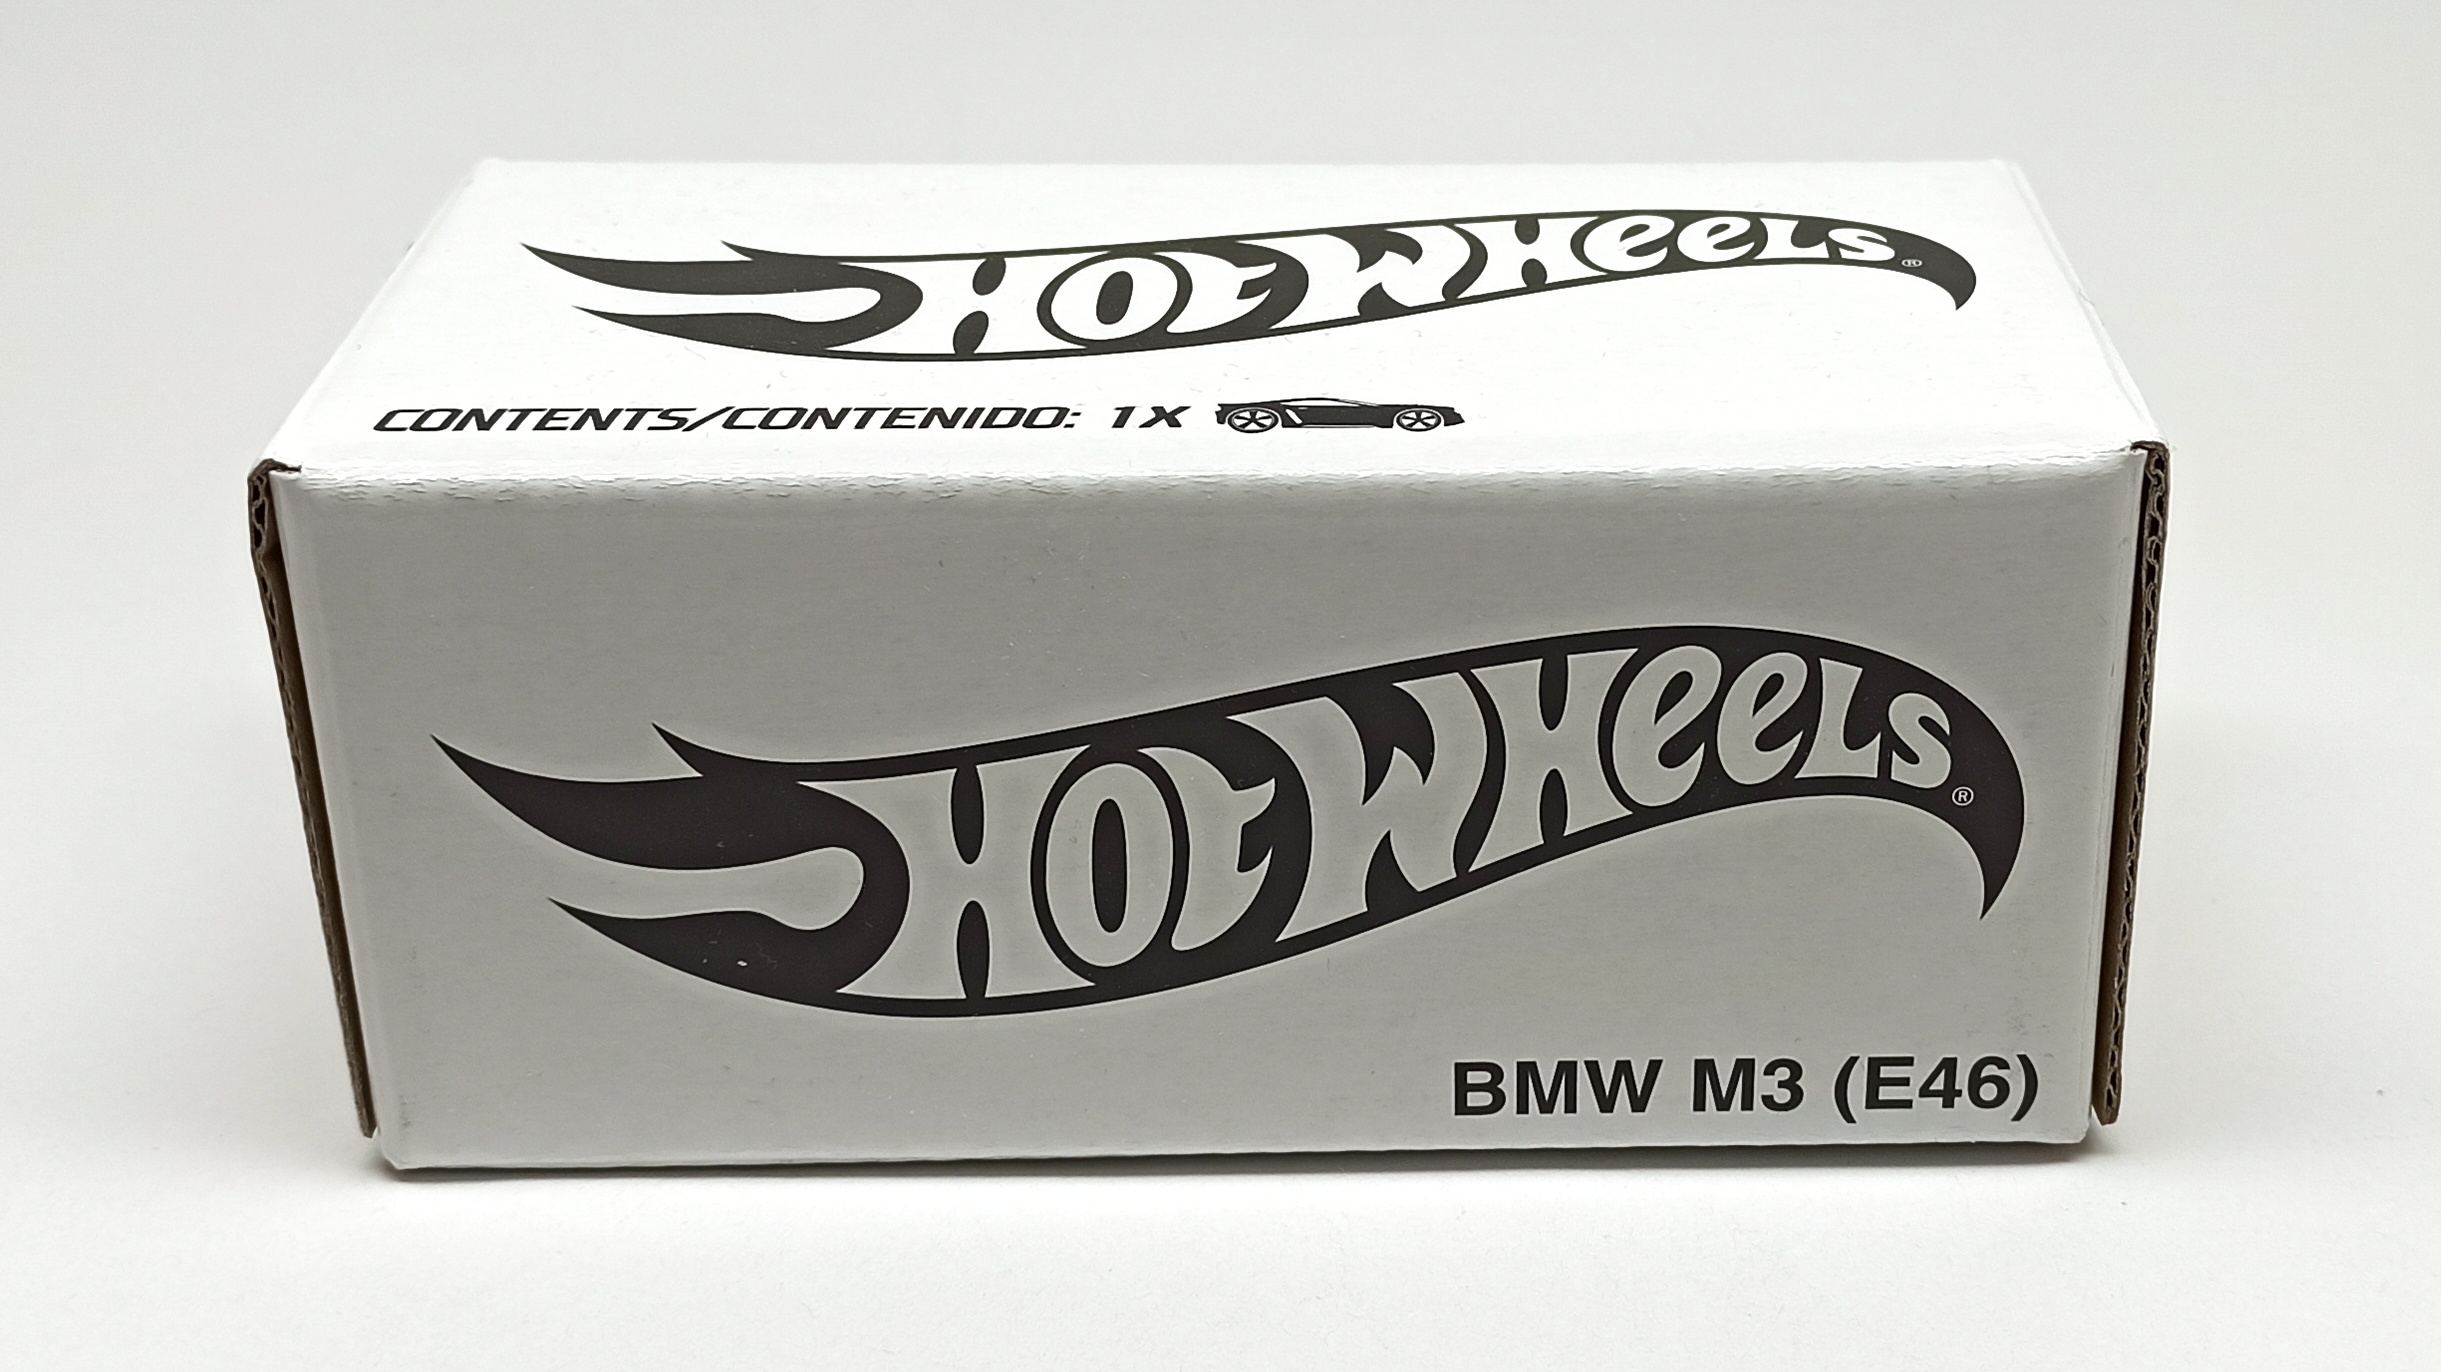 Hot Wheels BMW M3 E46 (HGK71) 2022 Mexico Convention white